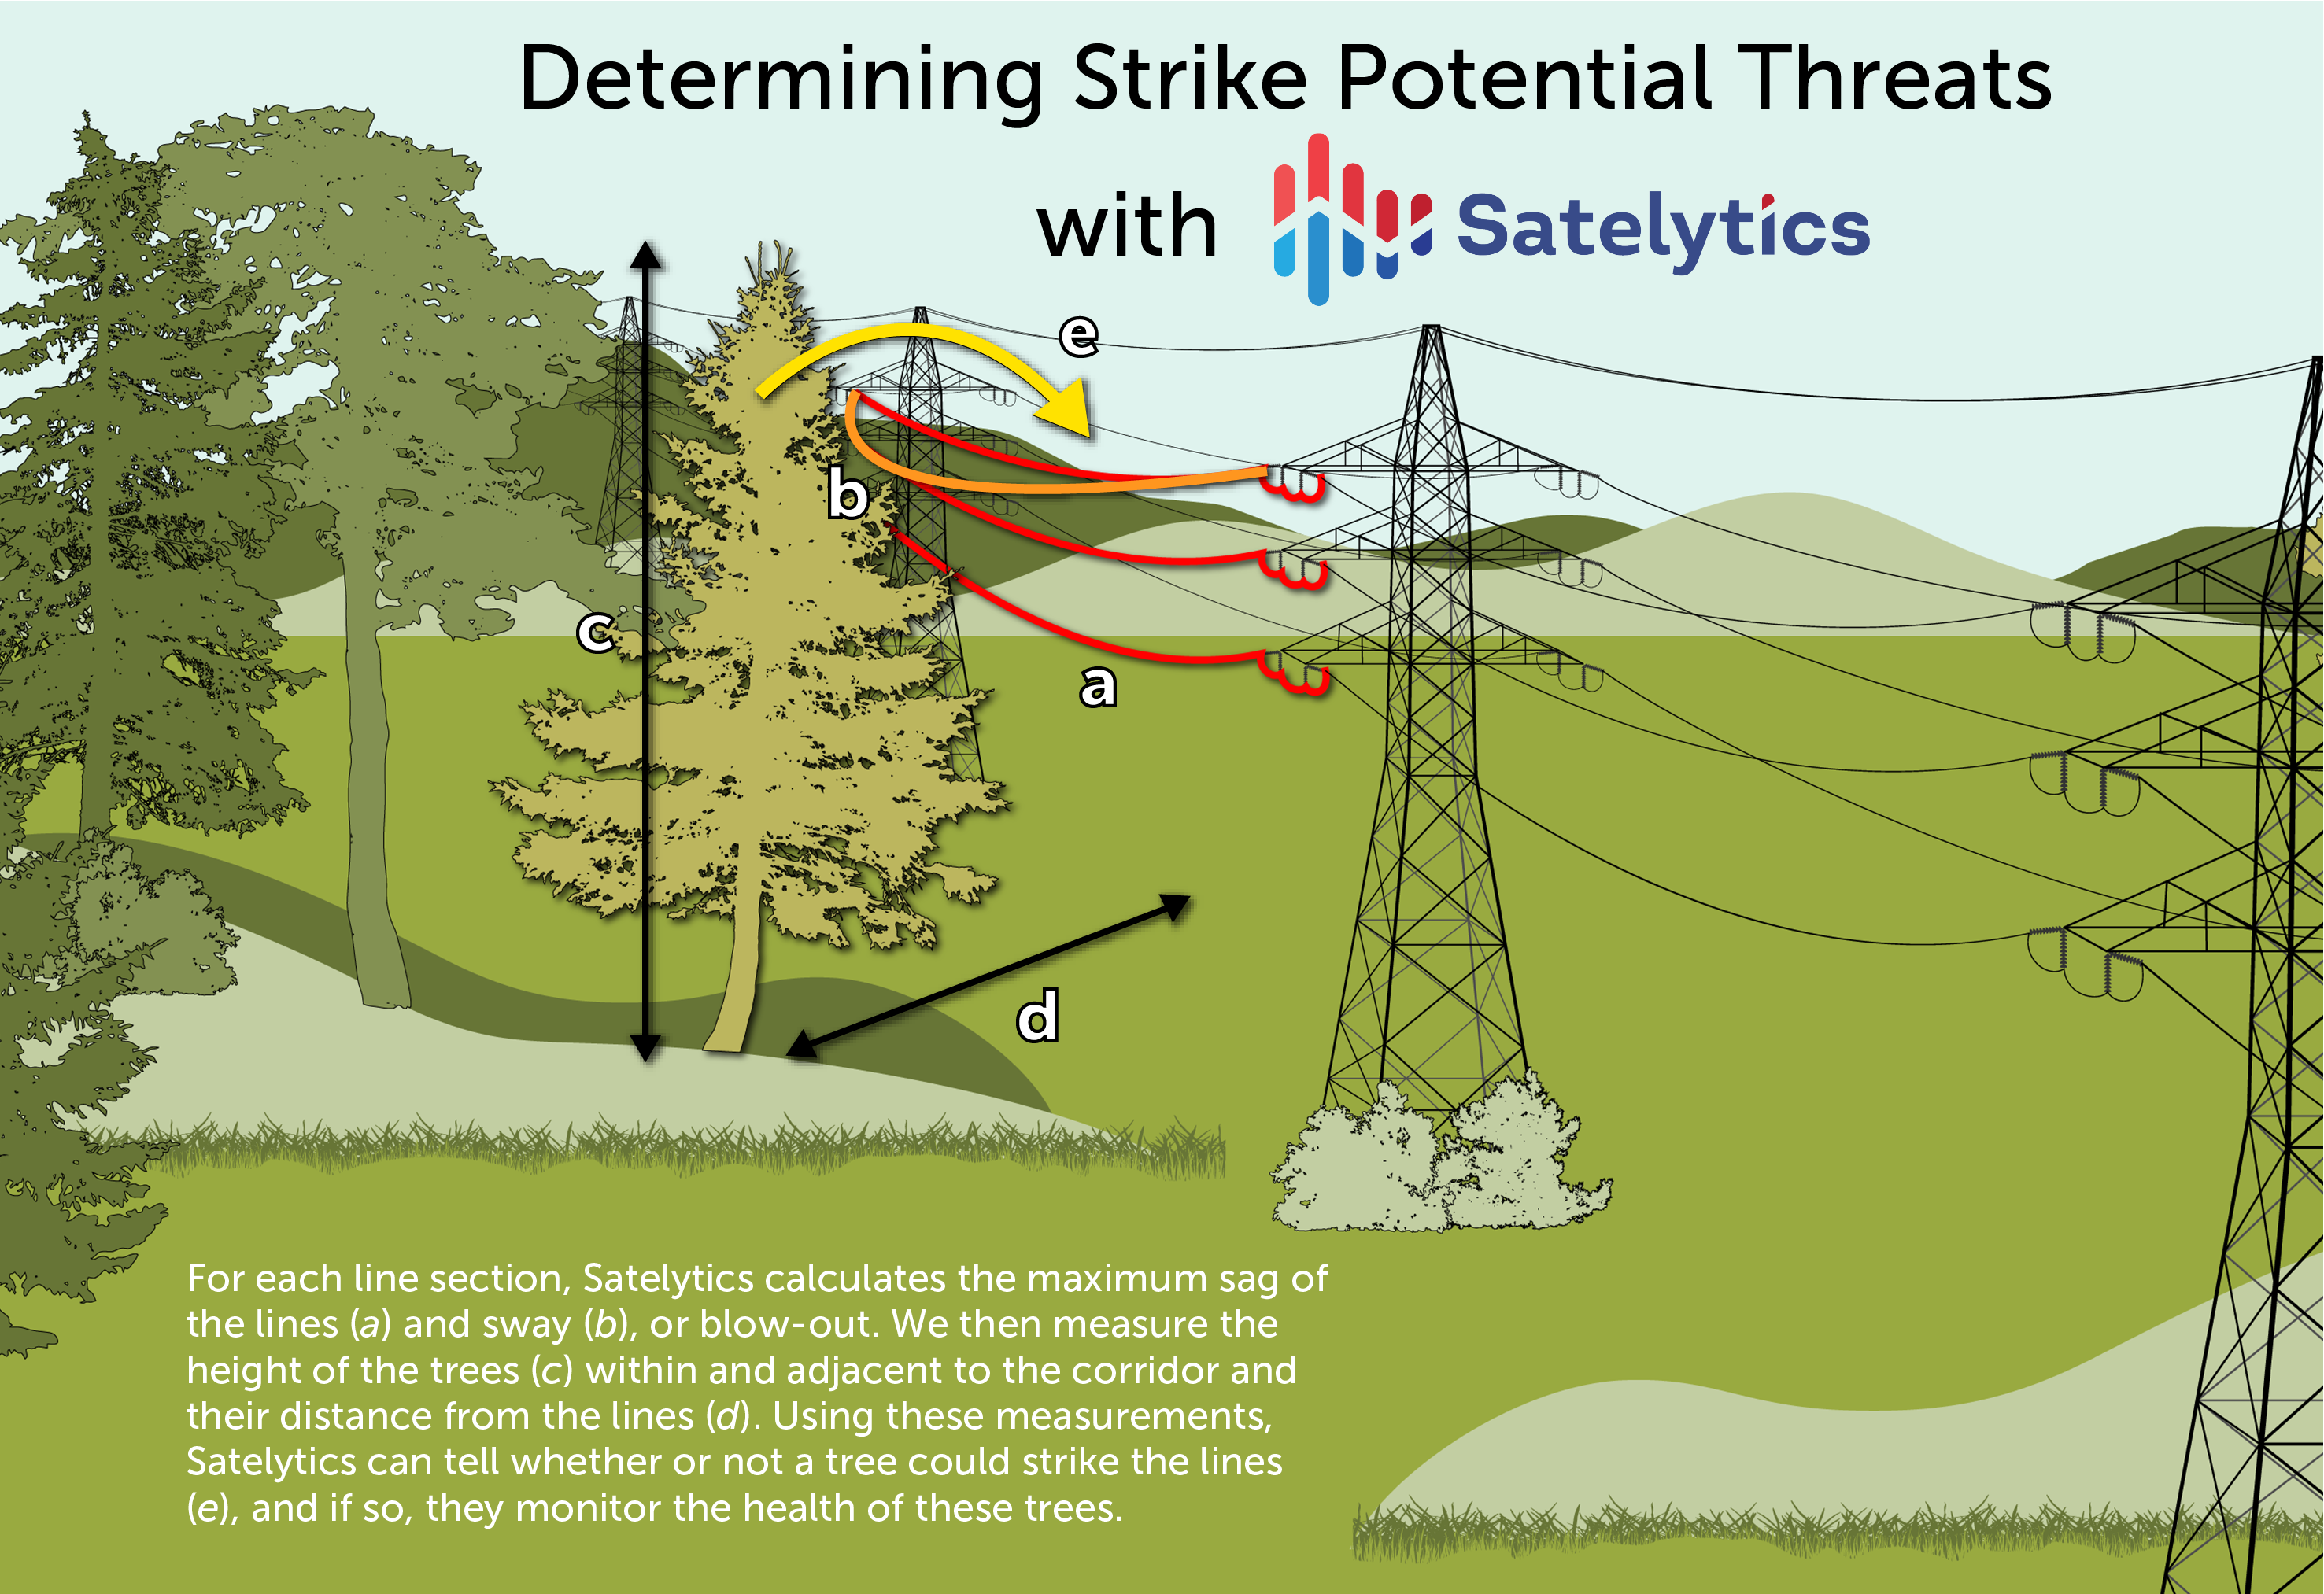 How Satelytics analyzes strike potential threats.